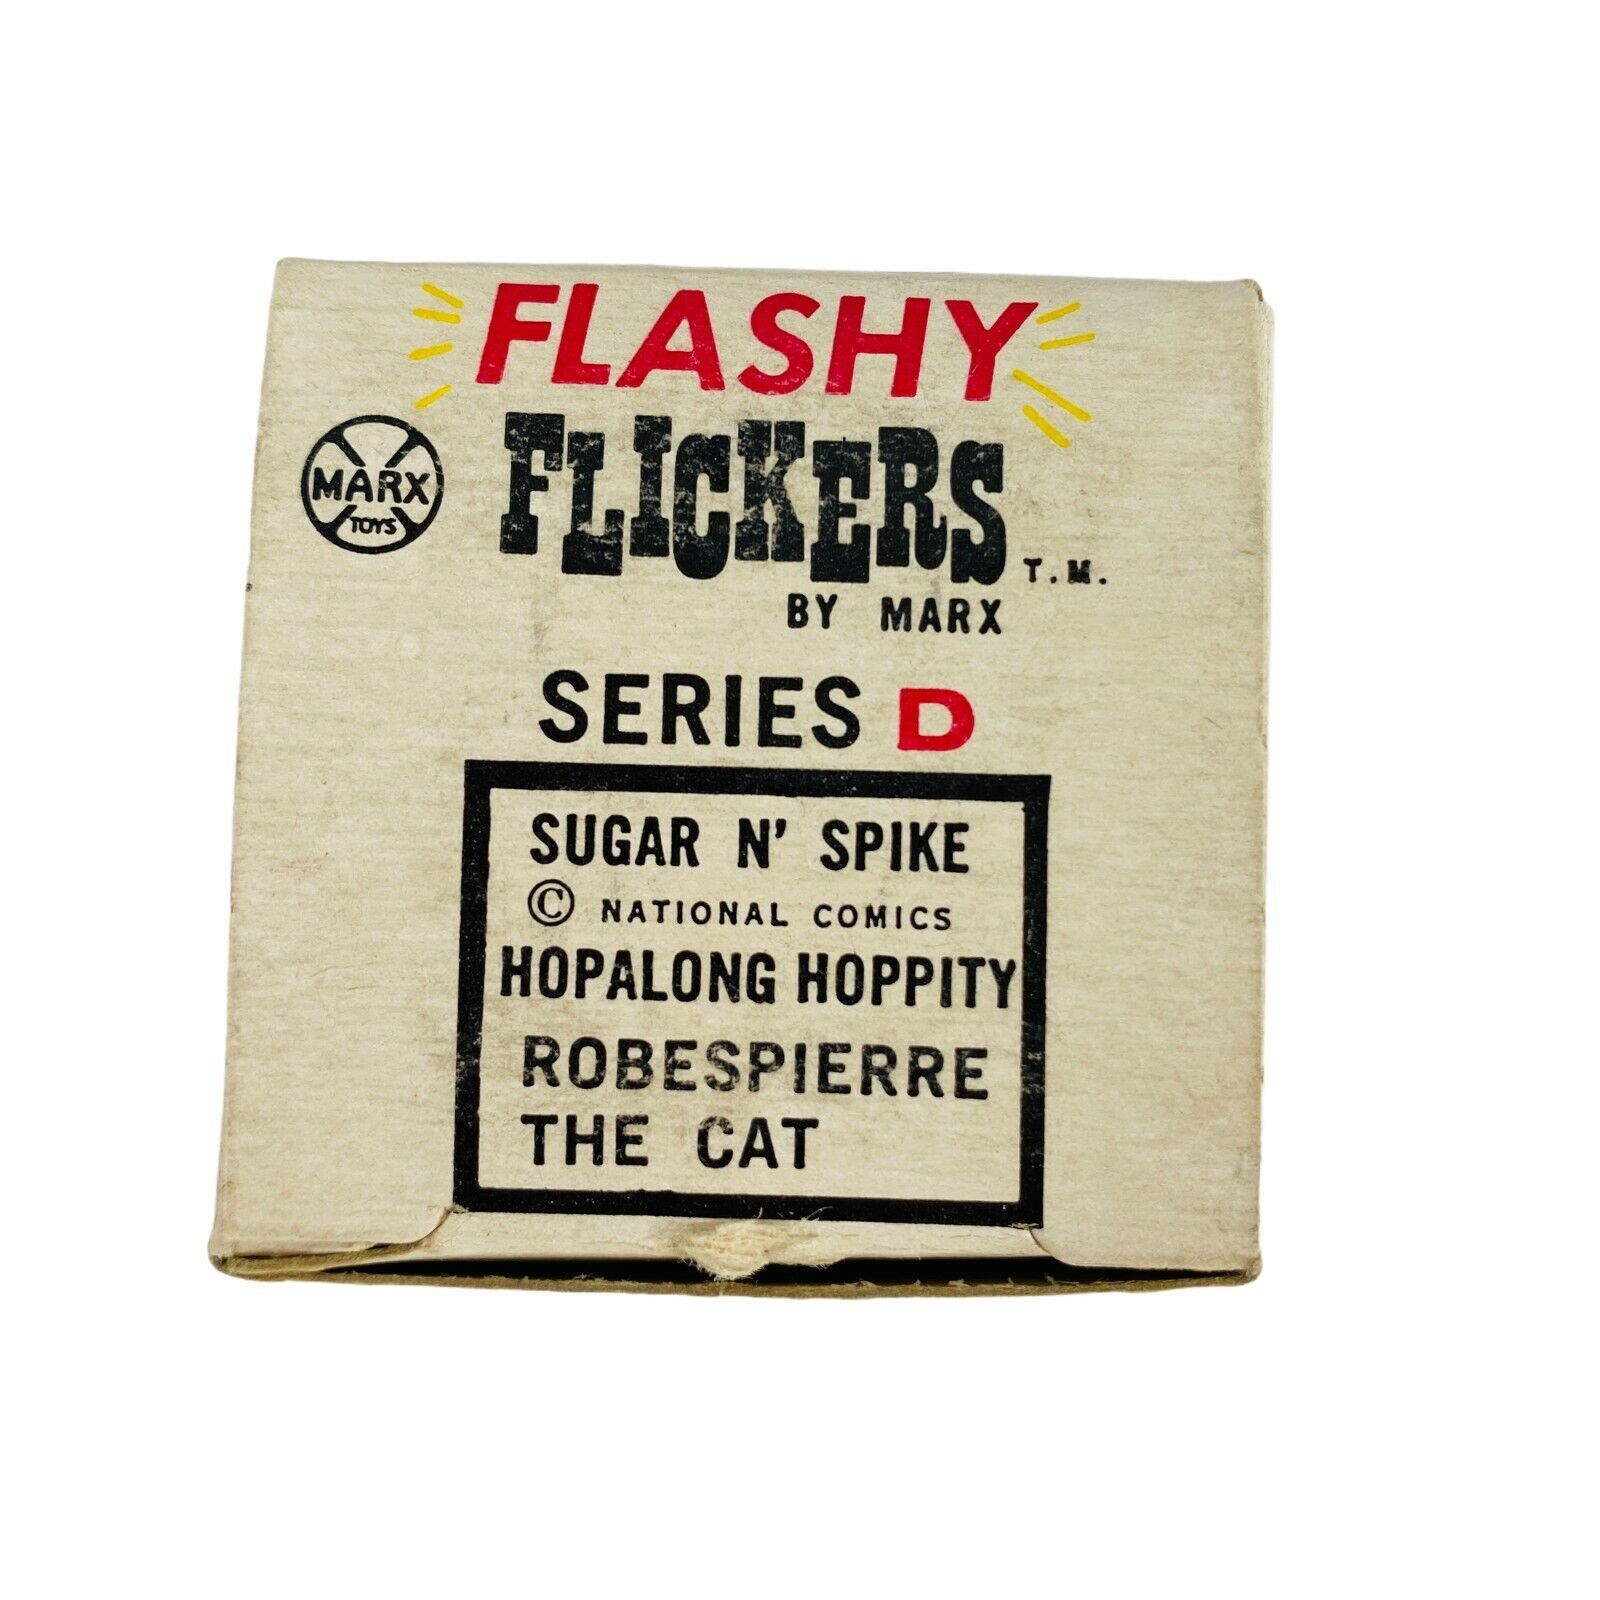 Vintage 1960s MARX Flashy Flickers Films Series D Sugar N Spice Hopalong Hoppity